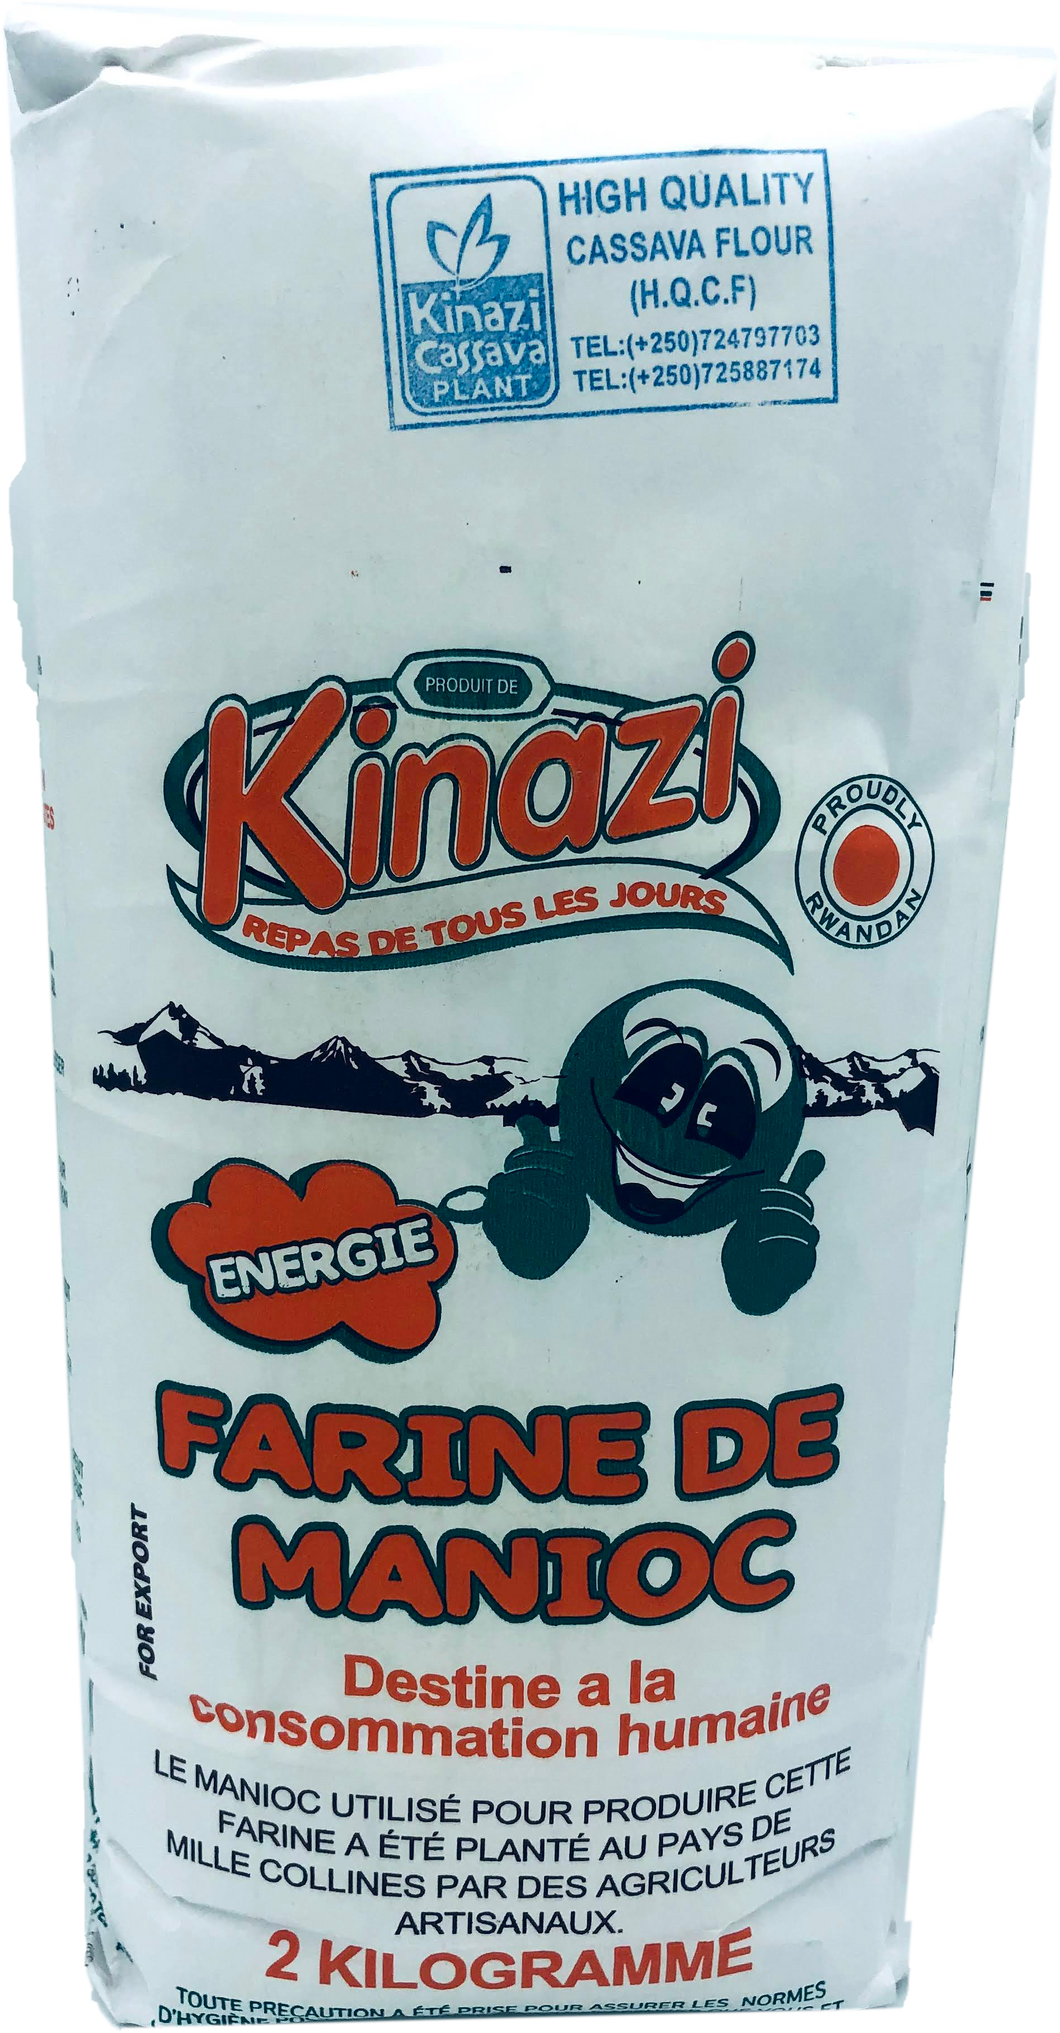 Kinazi Cassava Flour (Farine de Manioc)